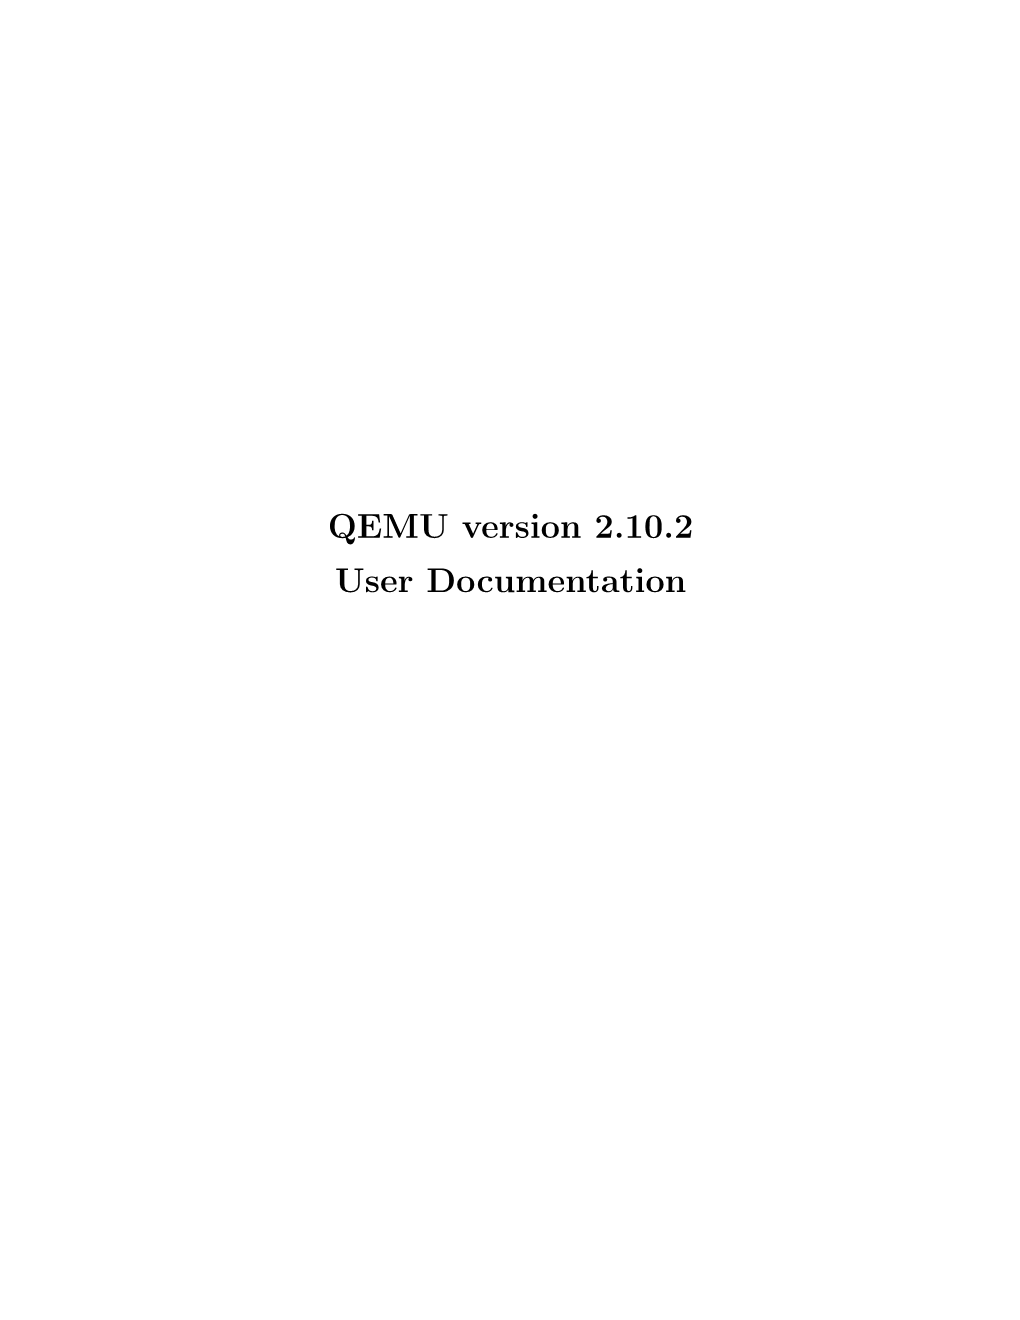 QEMU Version 2.10.2 User Documentation I